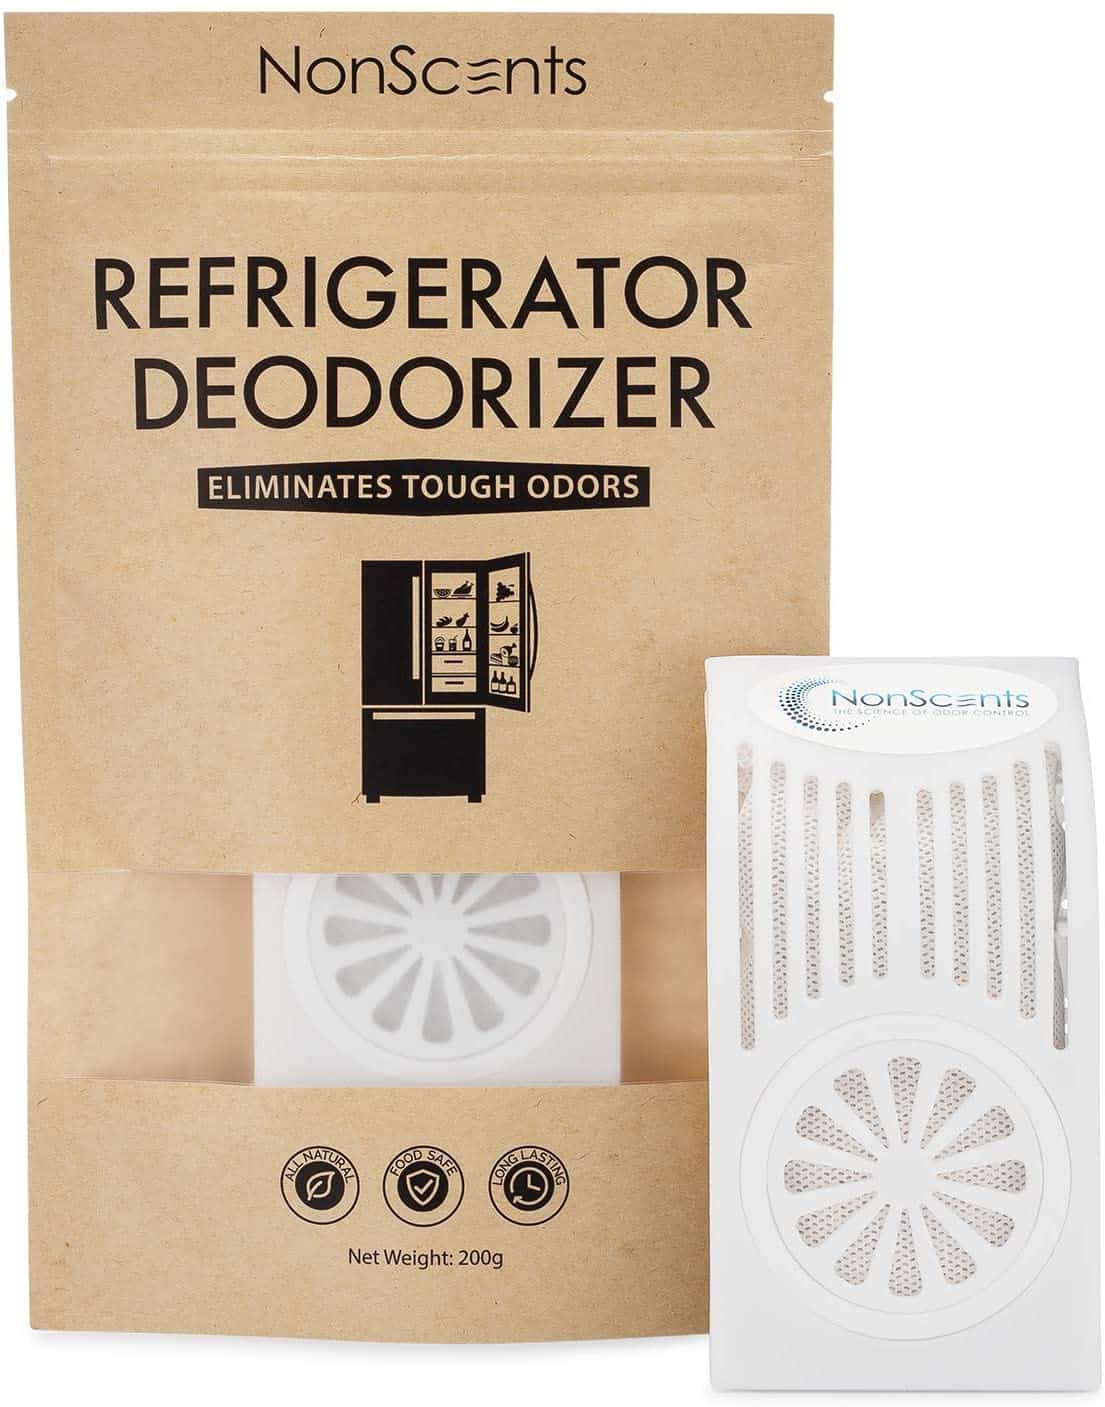 Refrigerator Deodorizer - Fridge and Freezer Odor Eliminator - Outperforms Baking Soda